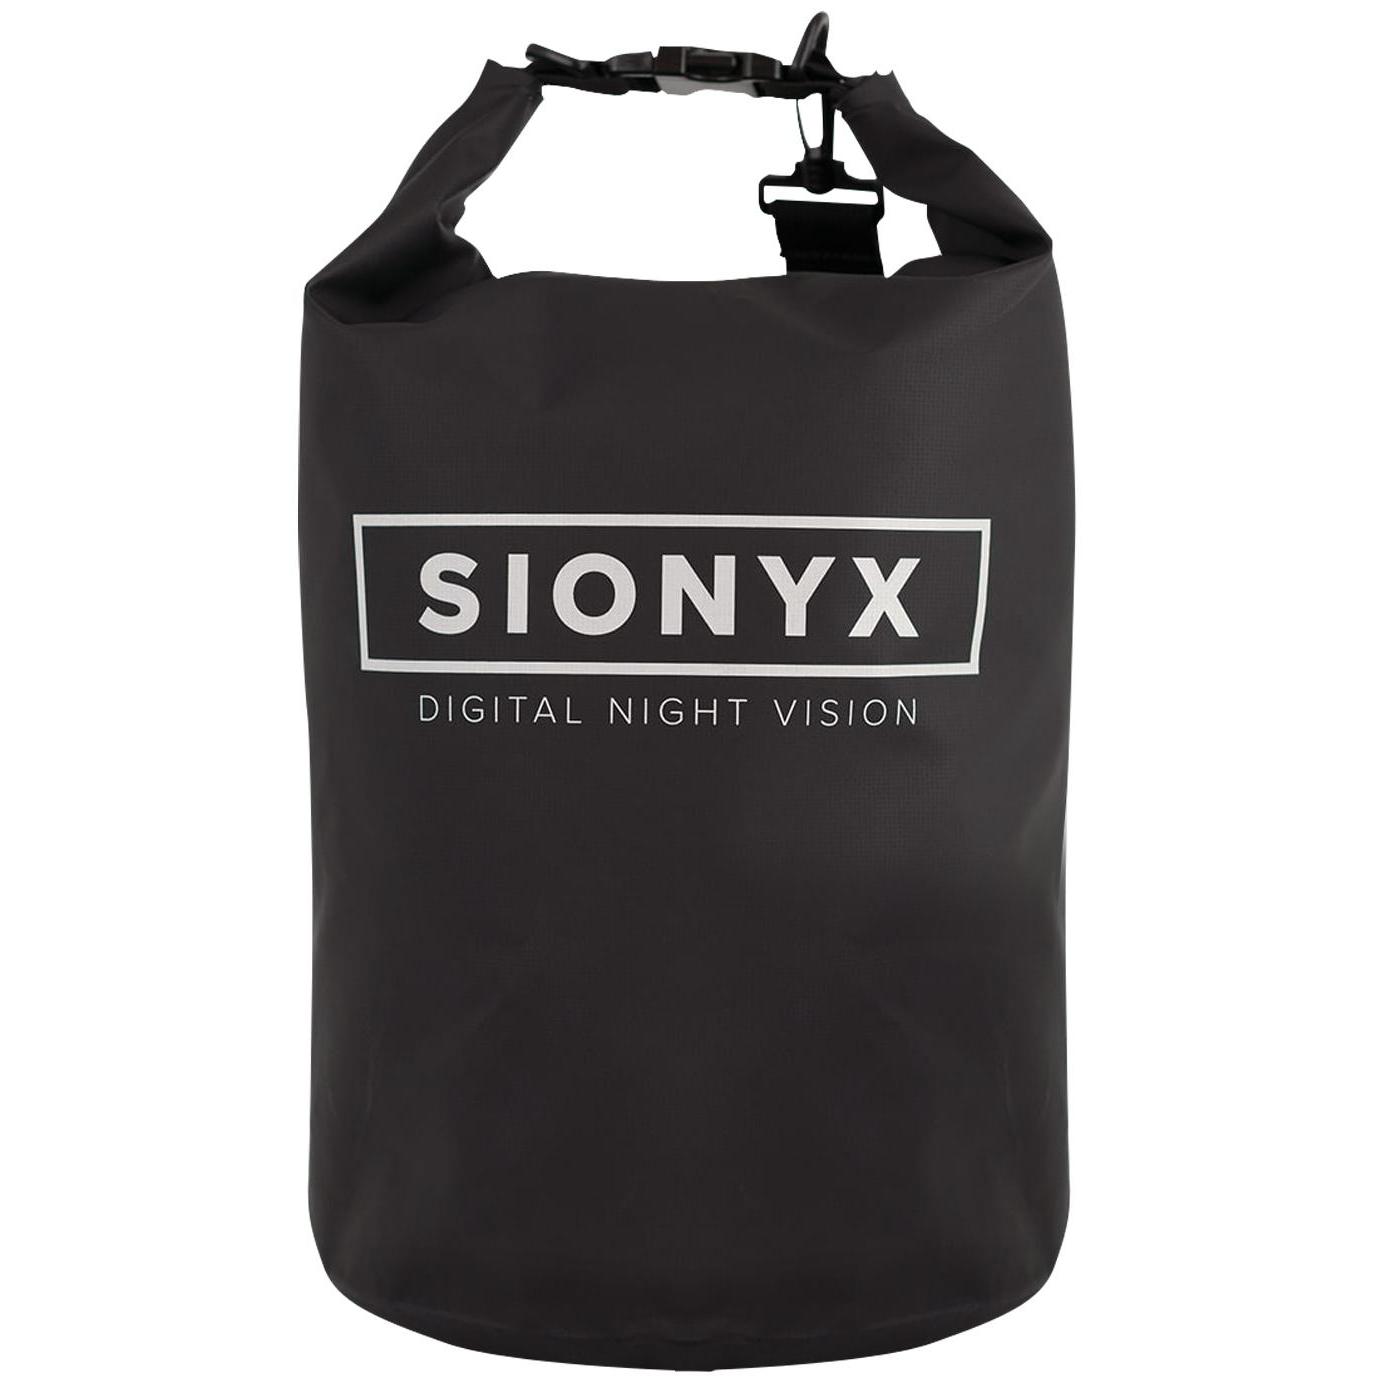 Sionyx - 20L Waterproof Dry Bag